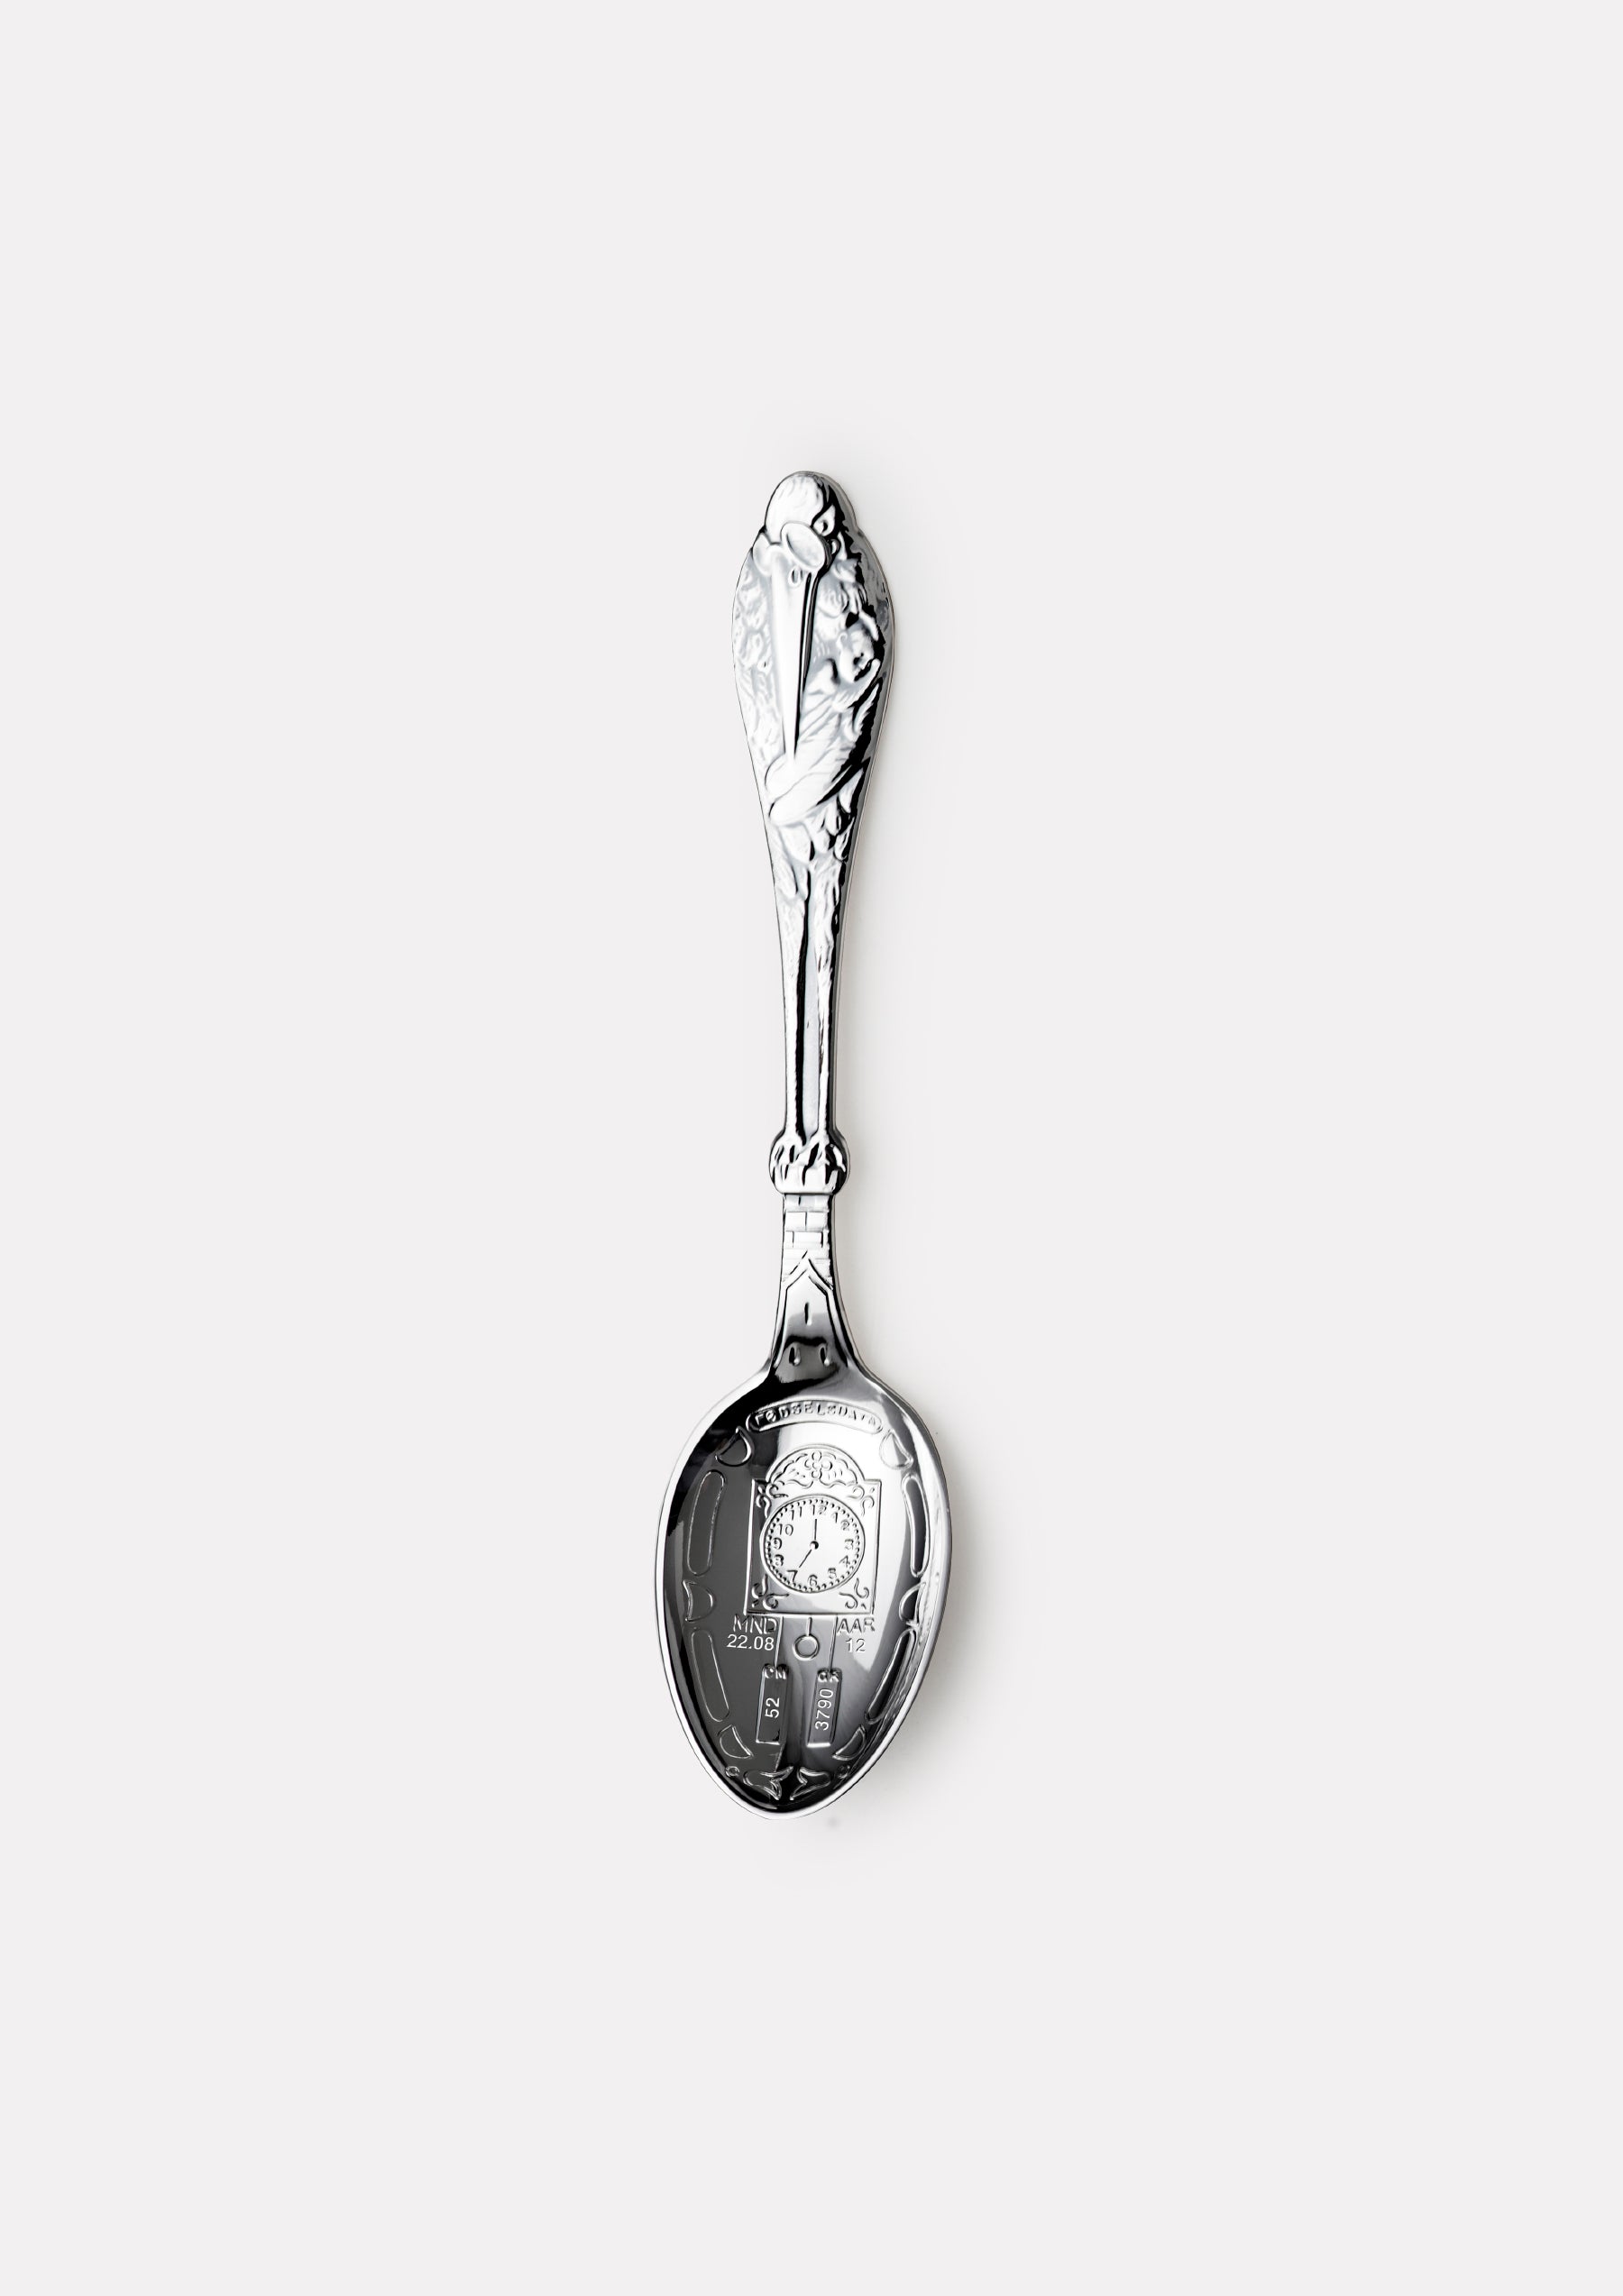 Stork children's spoon